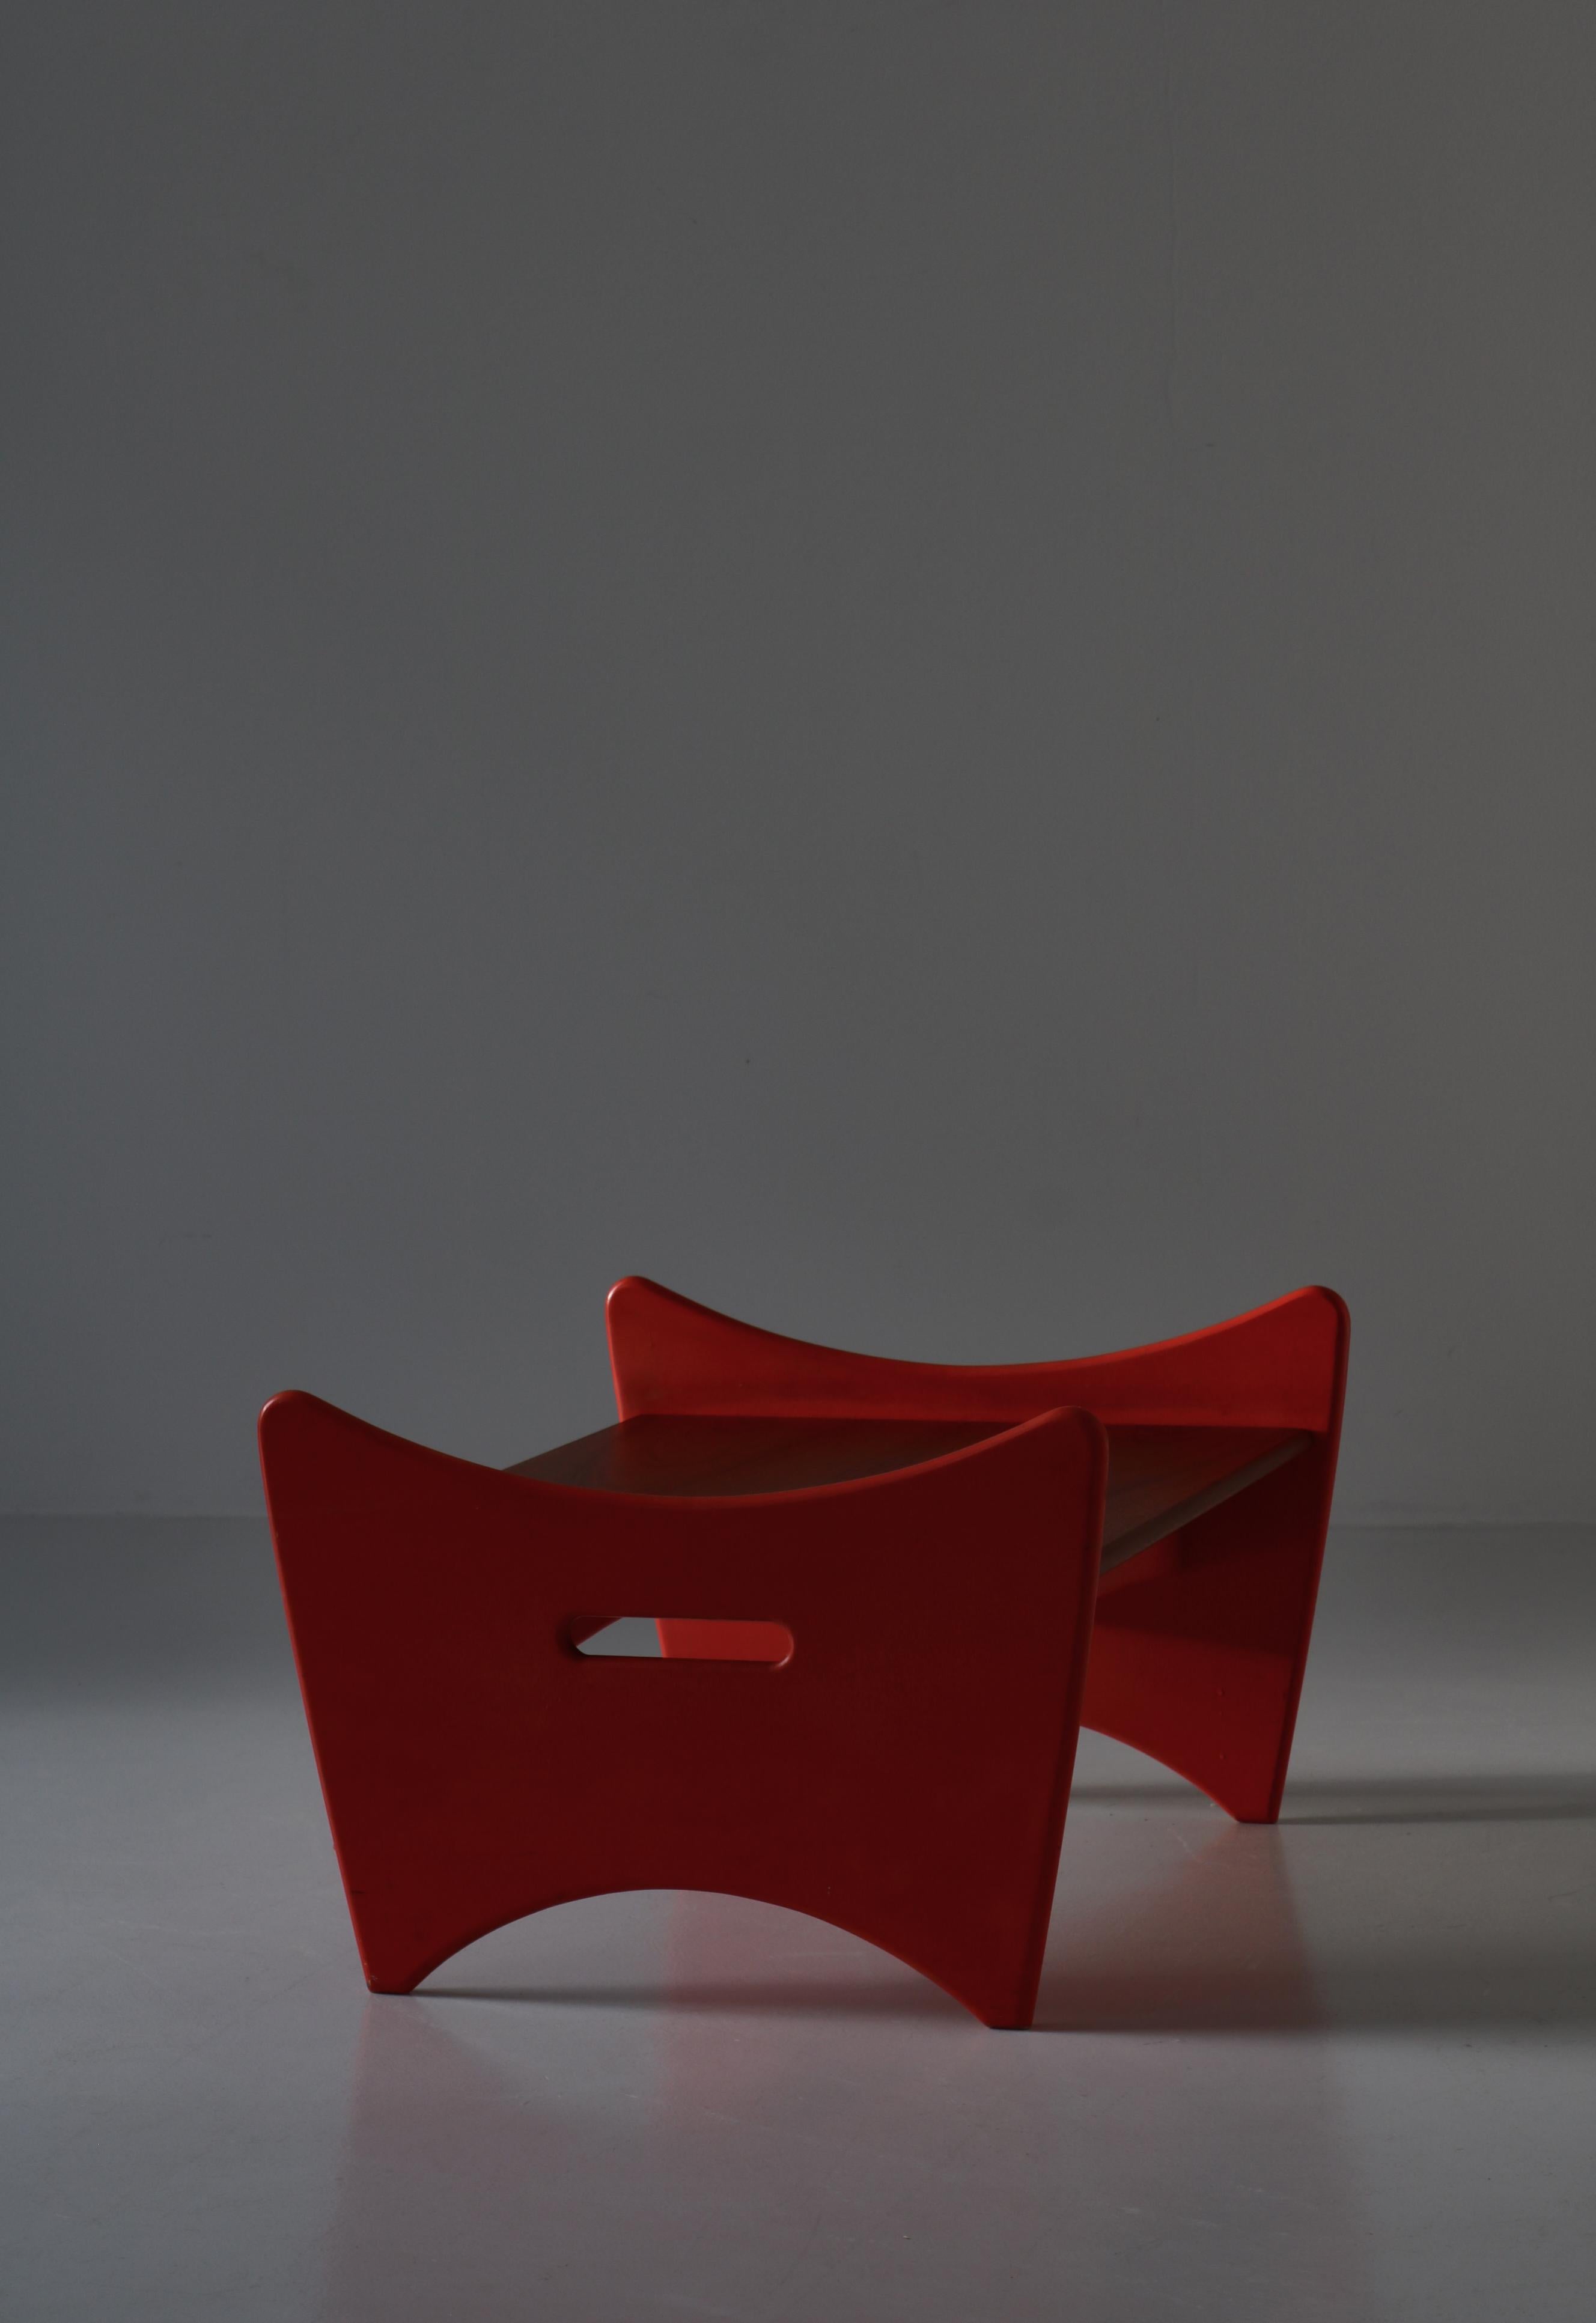 Mid-20th Century Scandinavian Modern Teak & Red Lacquered Stool / Side Table by Illum Wikkelsø